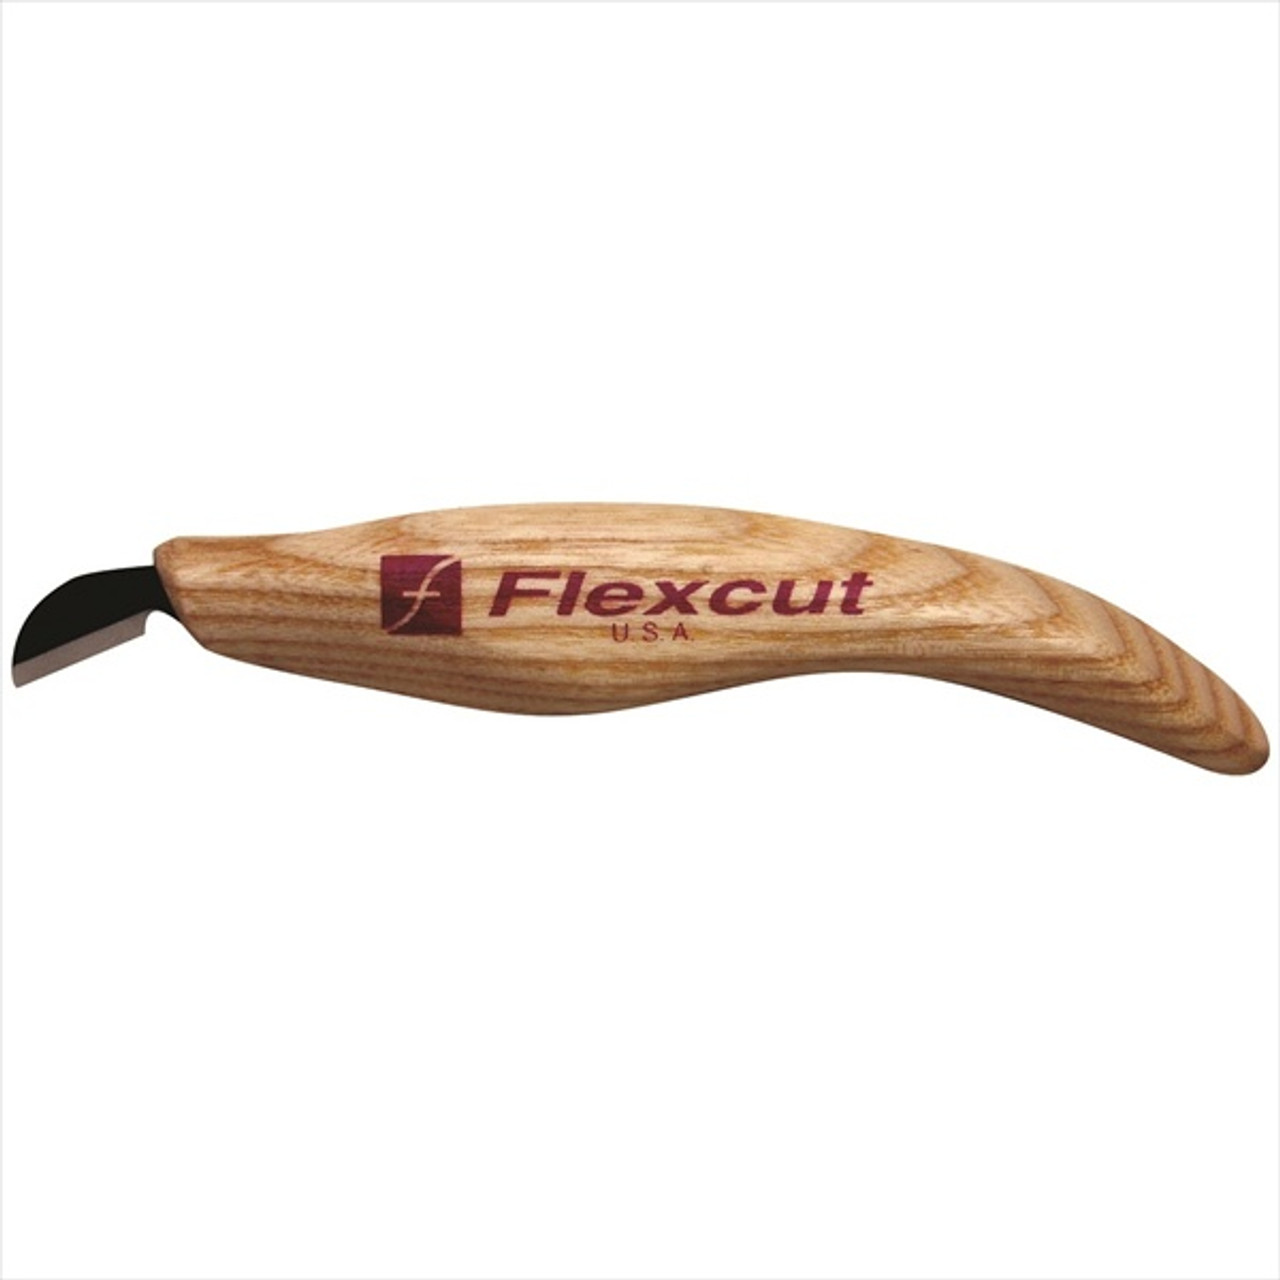 Flexcut 4 pc. Knife Set - KN100